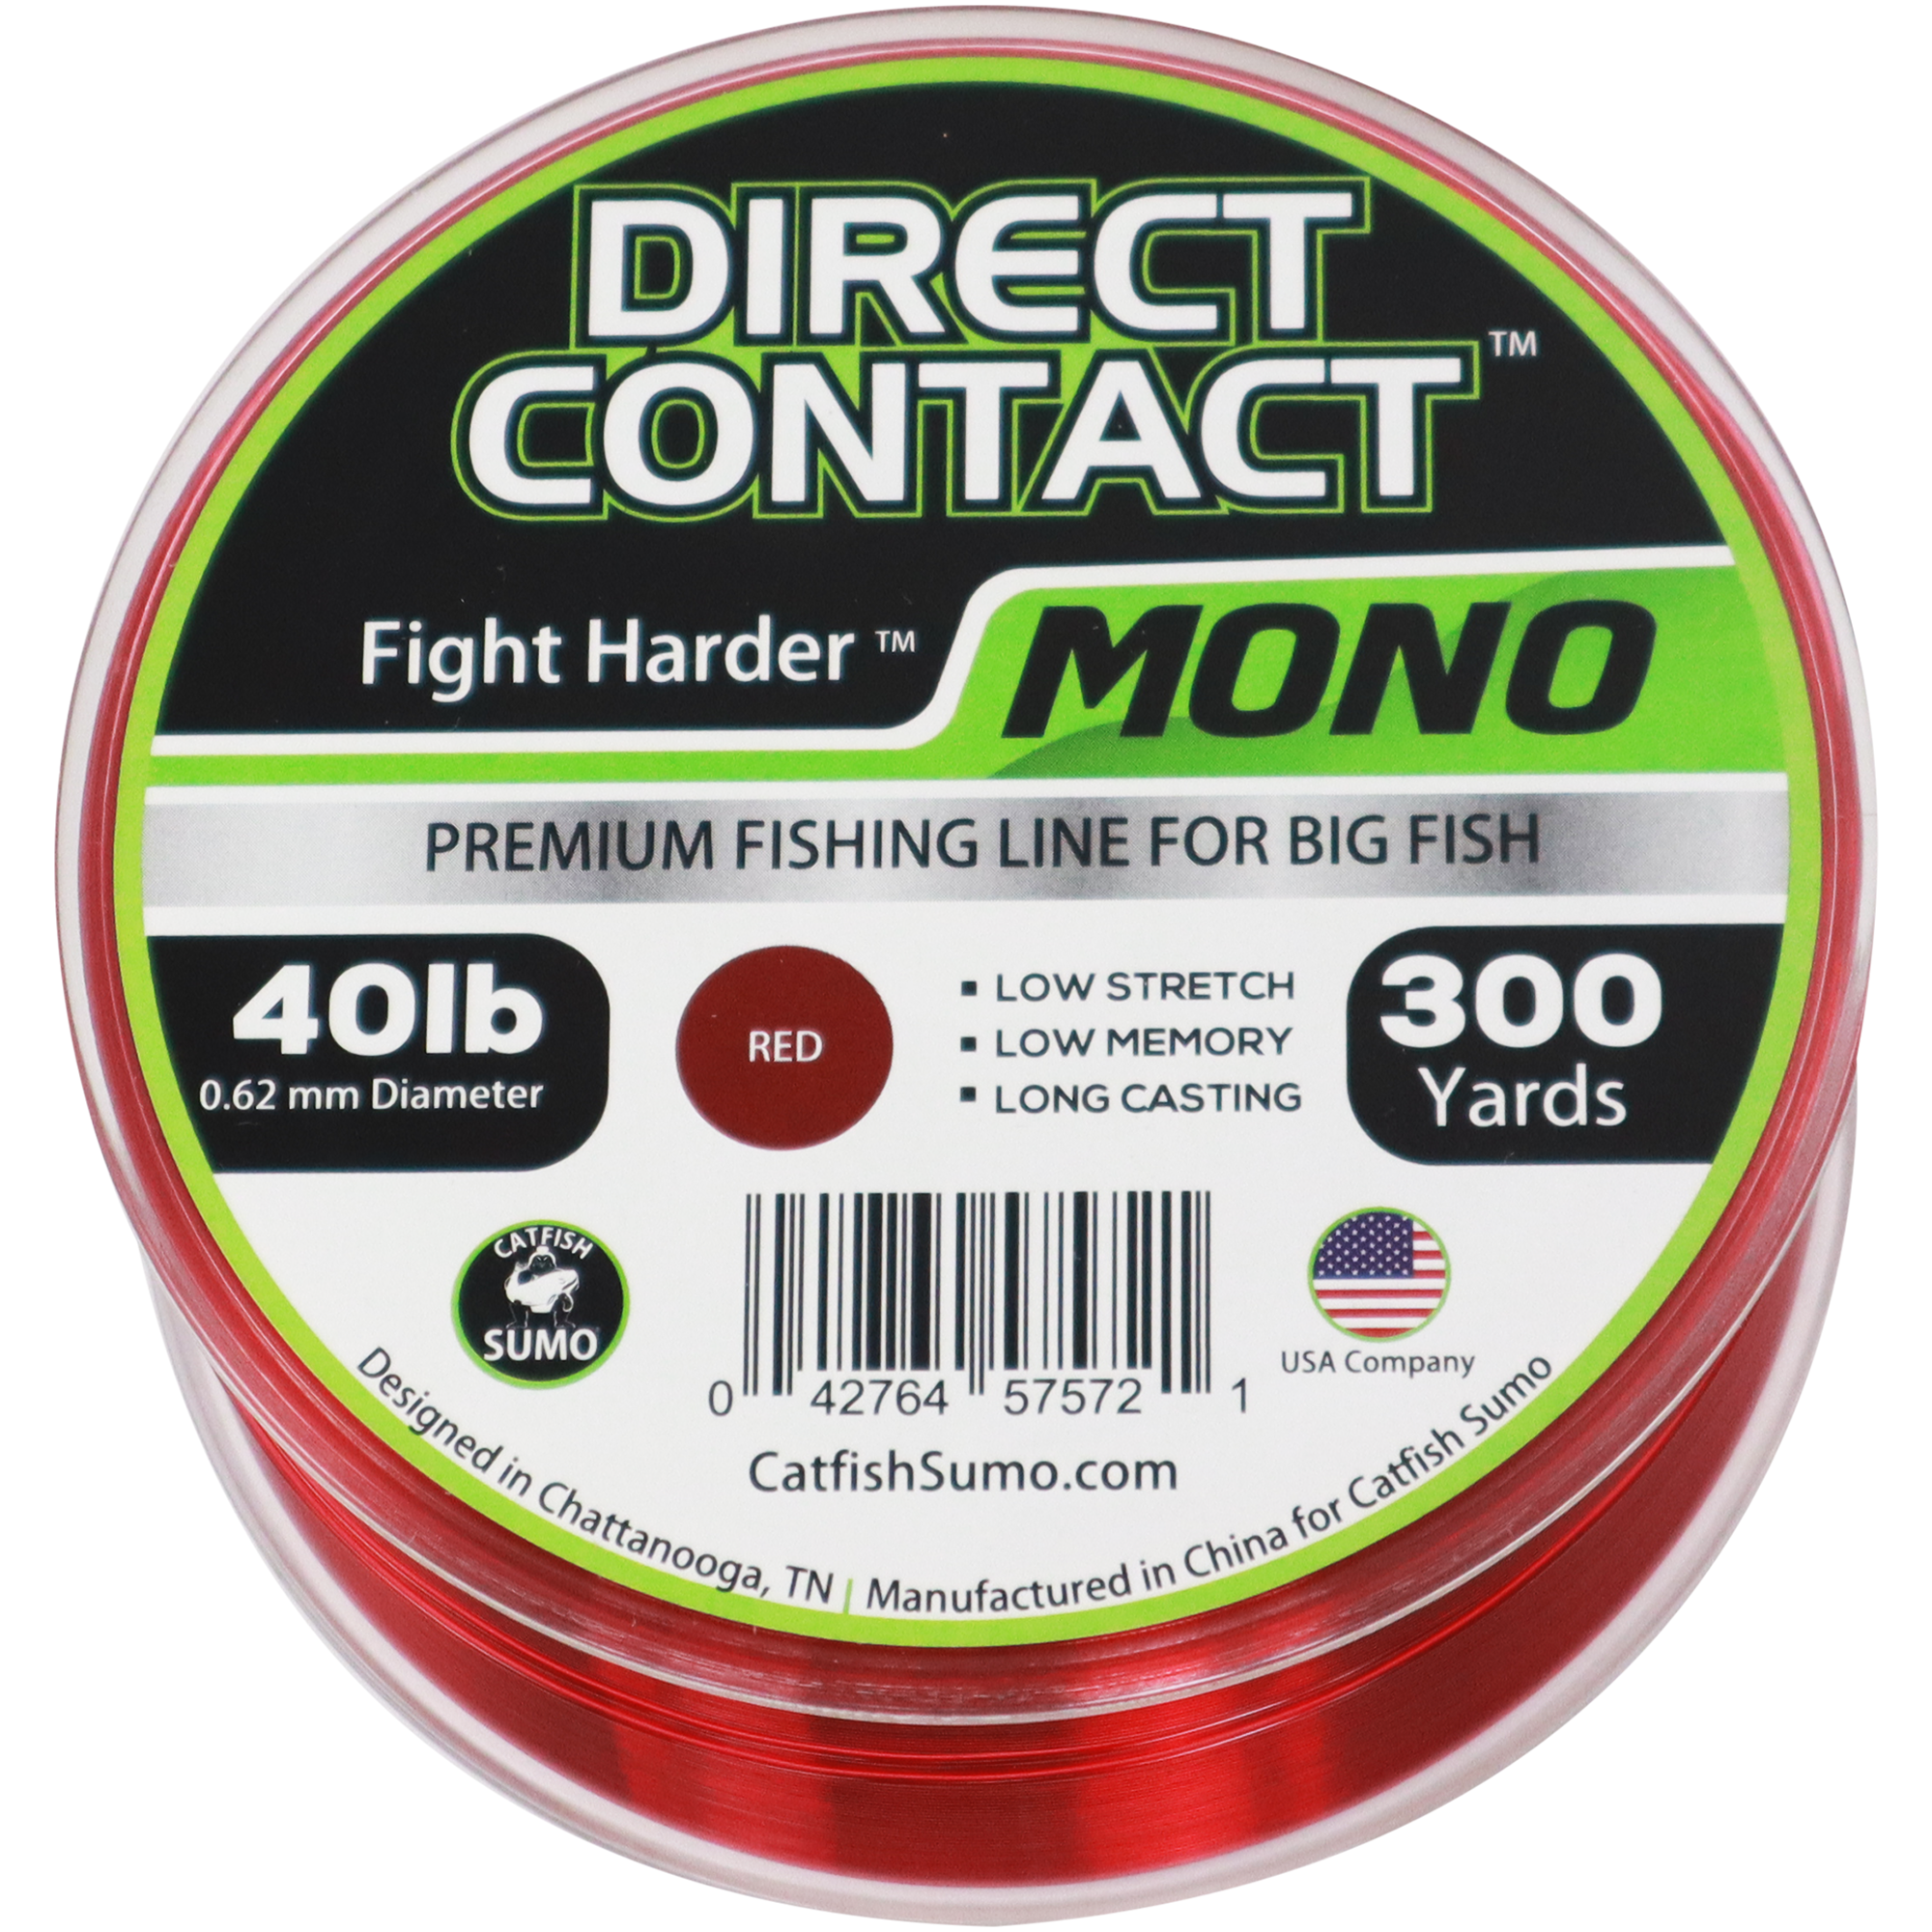 Direct Contact™ Premium Fishing Line for Big Fish, Mono, 300 Yard Spool